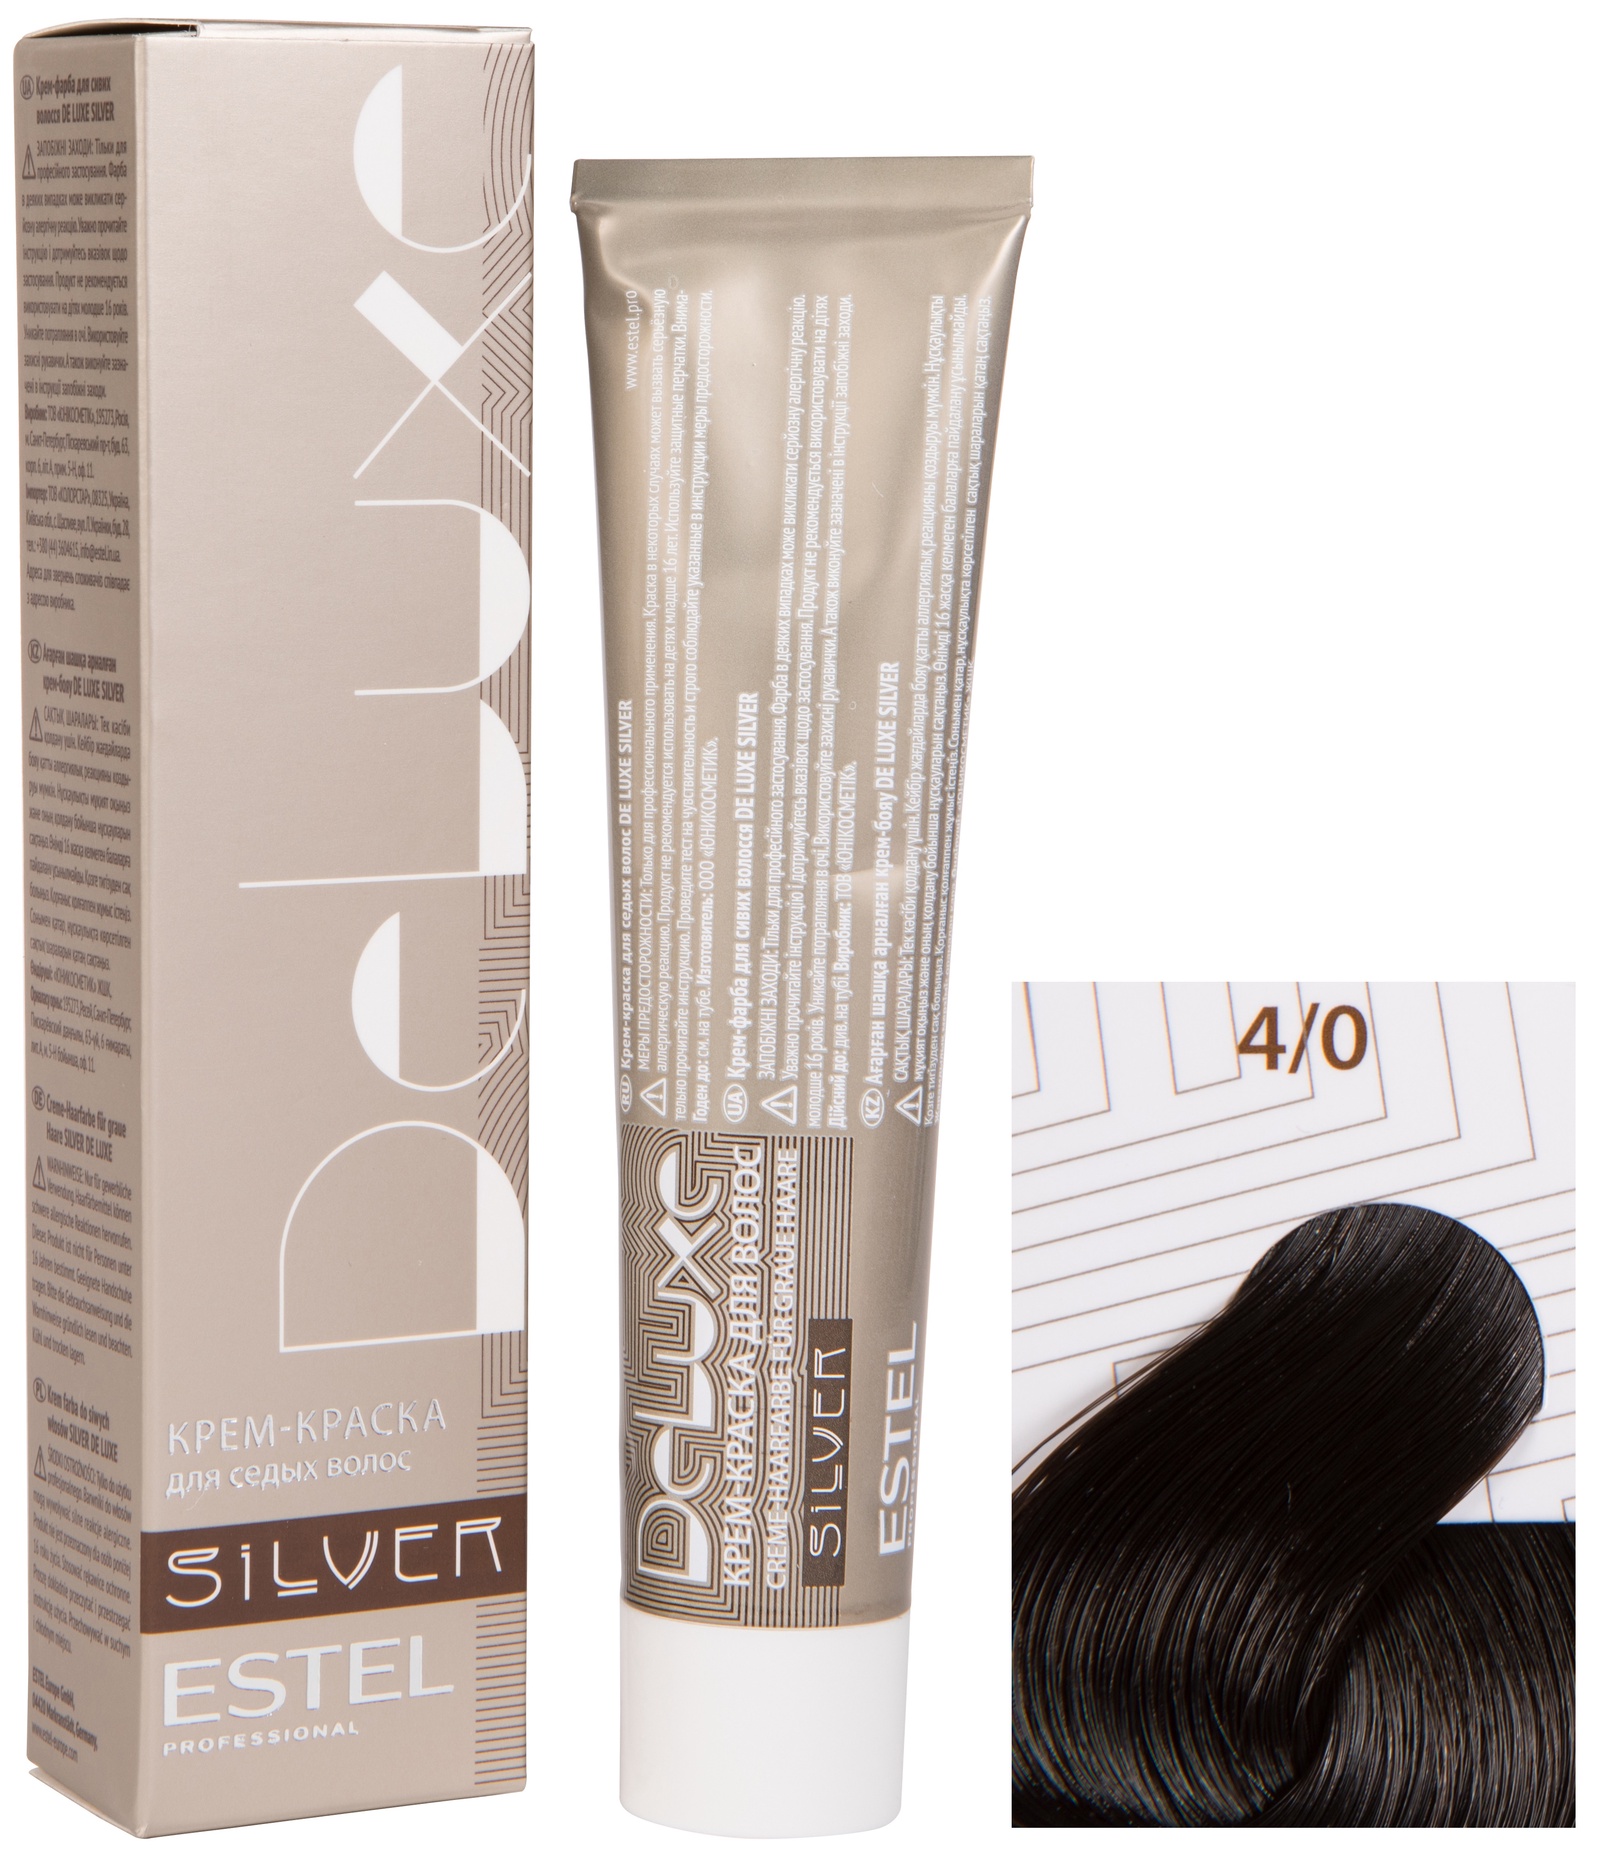 Краска для волос ESTEL PROFESSIONAL 4/0 краска-уход DE LUXE SILVER для окрашивания волос, шатен 60 мл